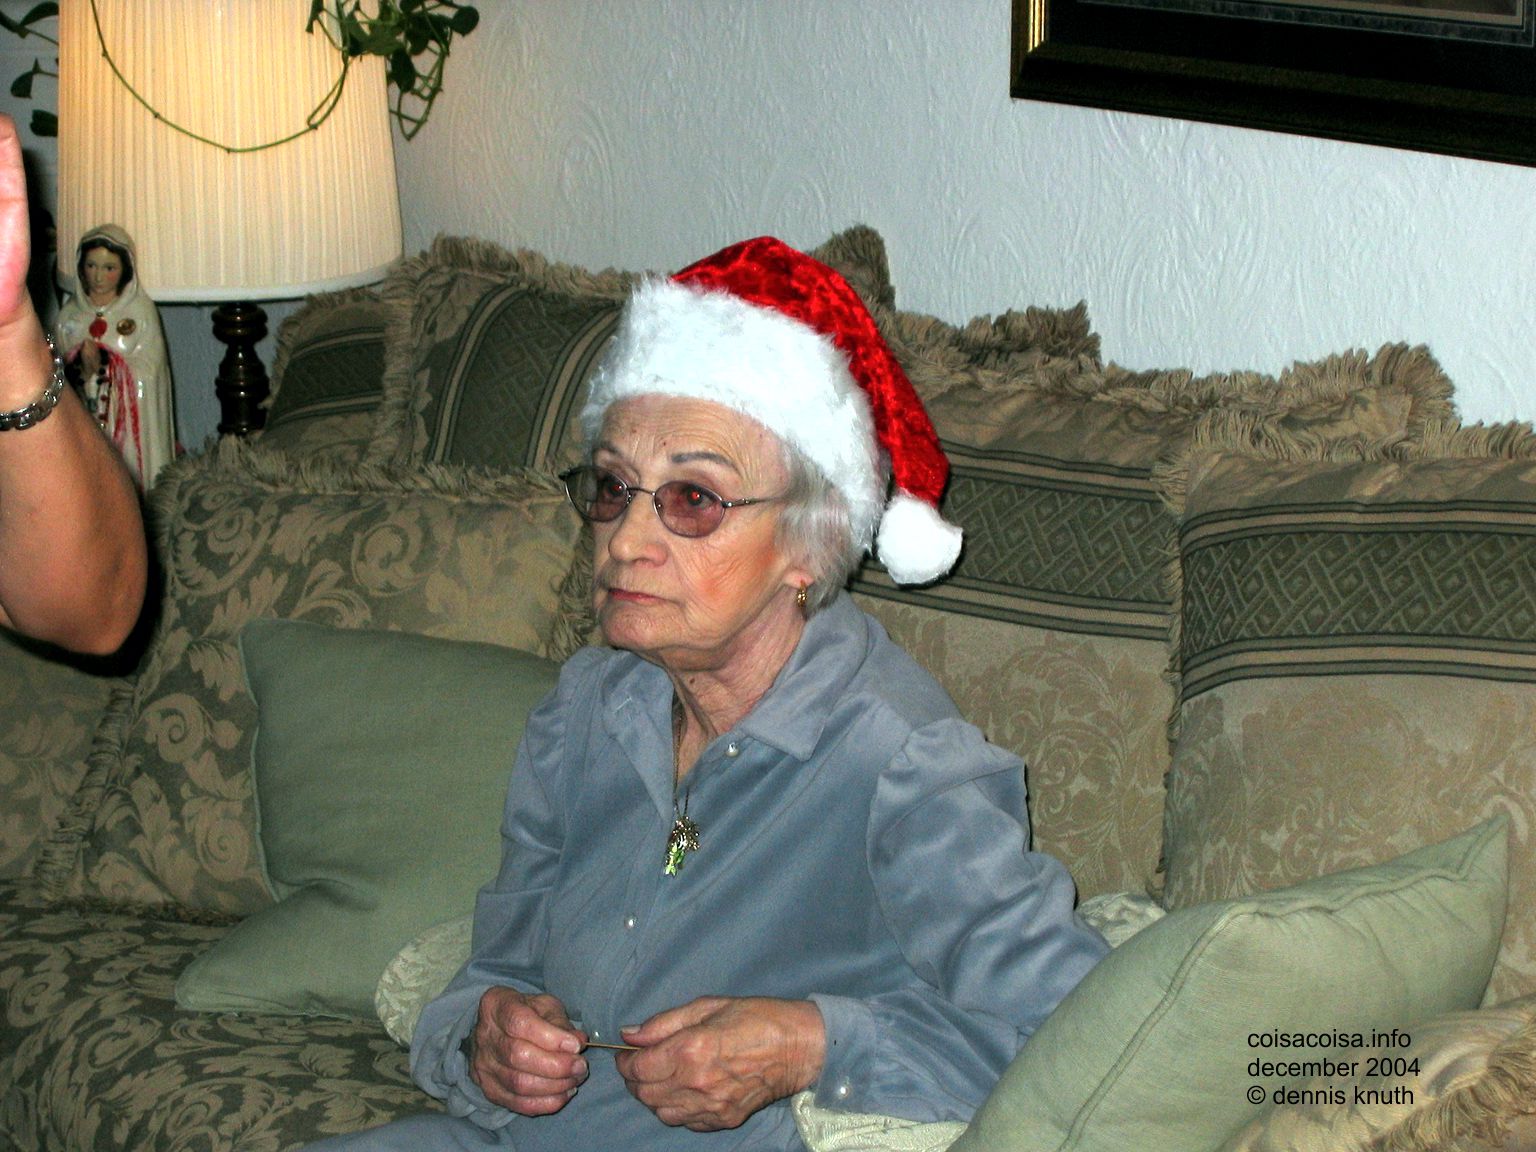 Olga K plays Mrs. Santa Claus